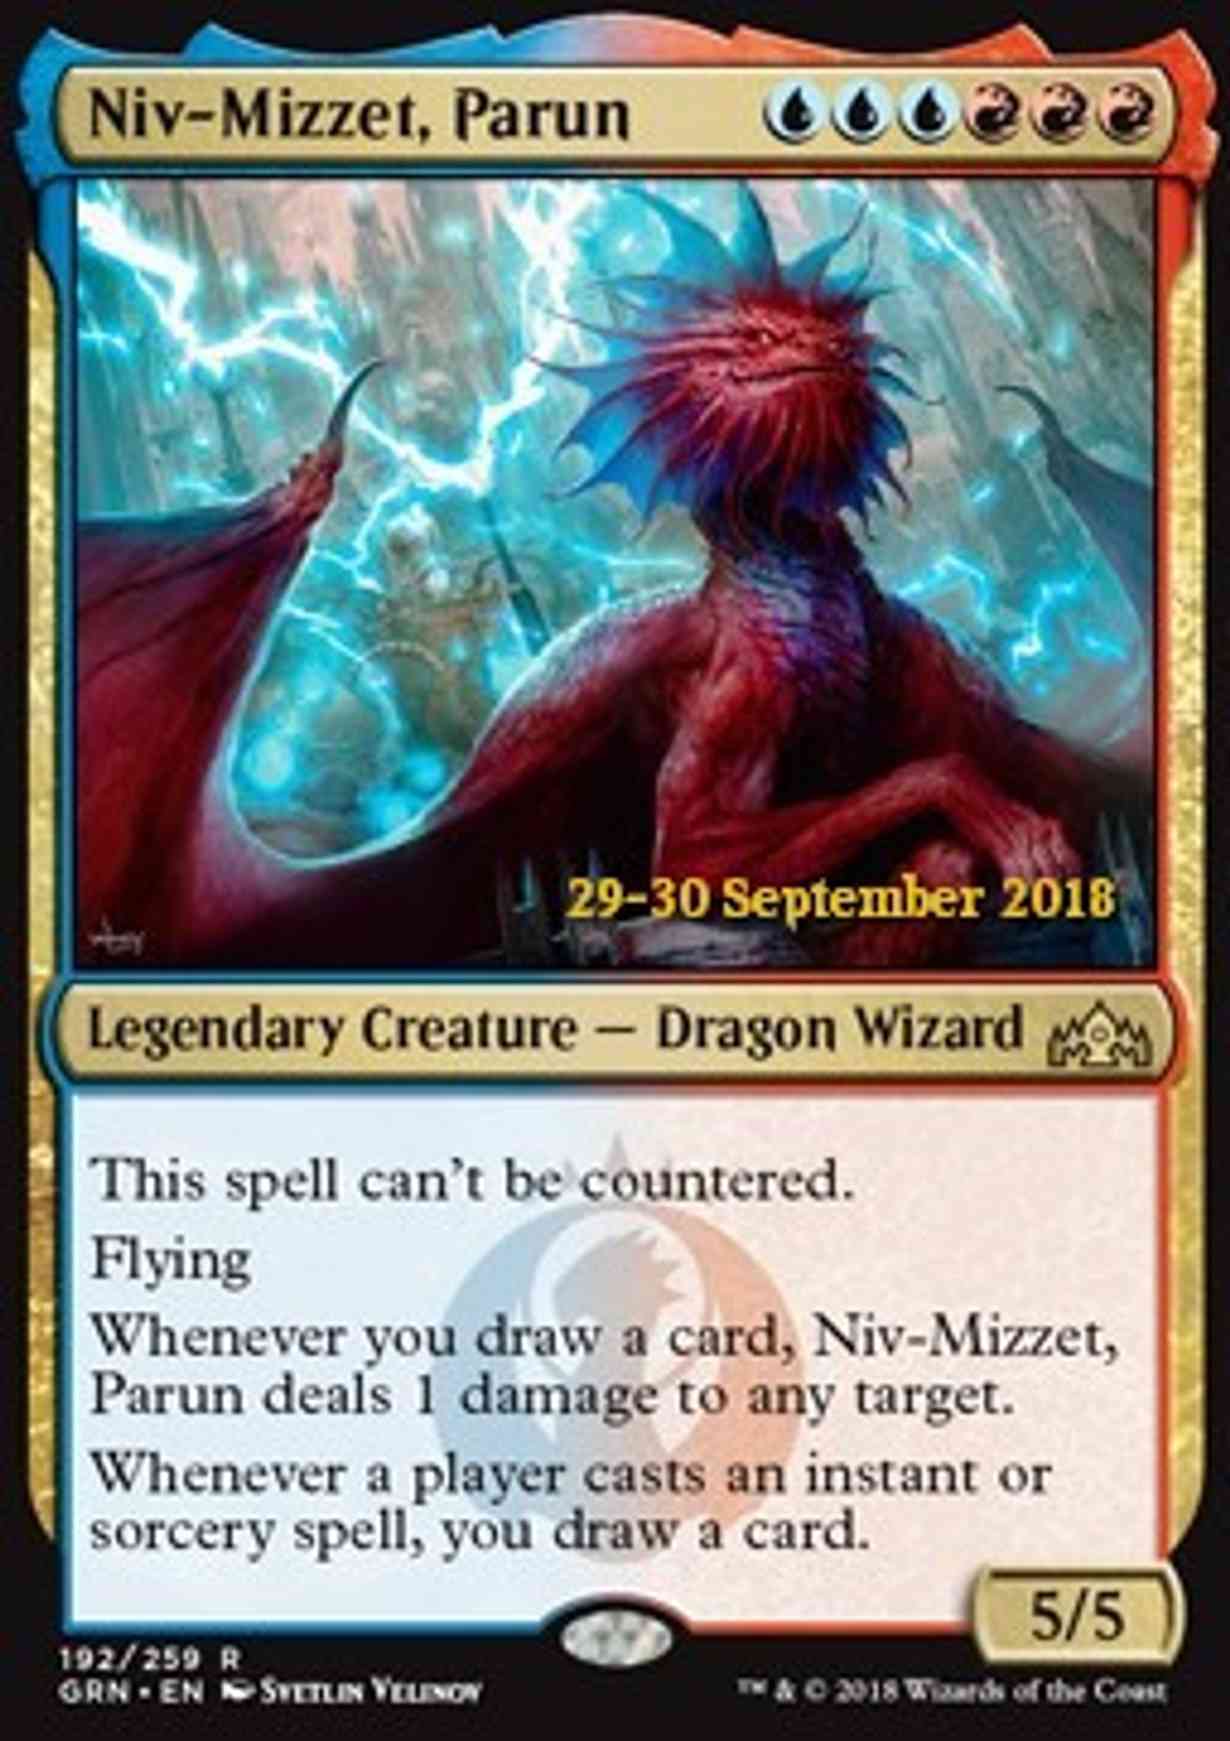 Niv-Mizzet, Parun magic card front